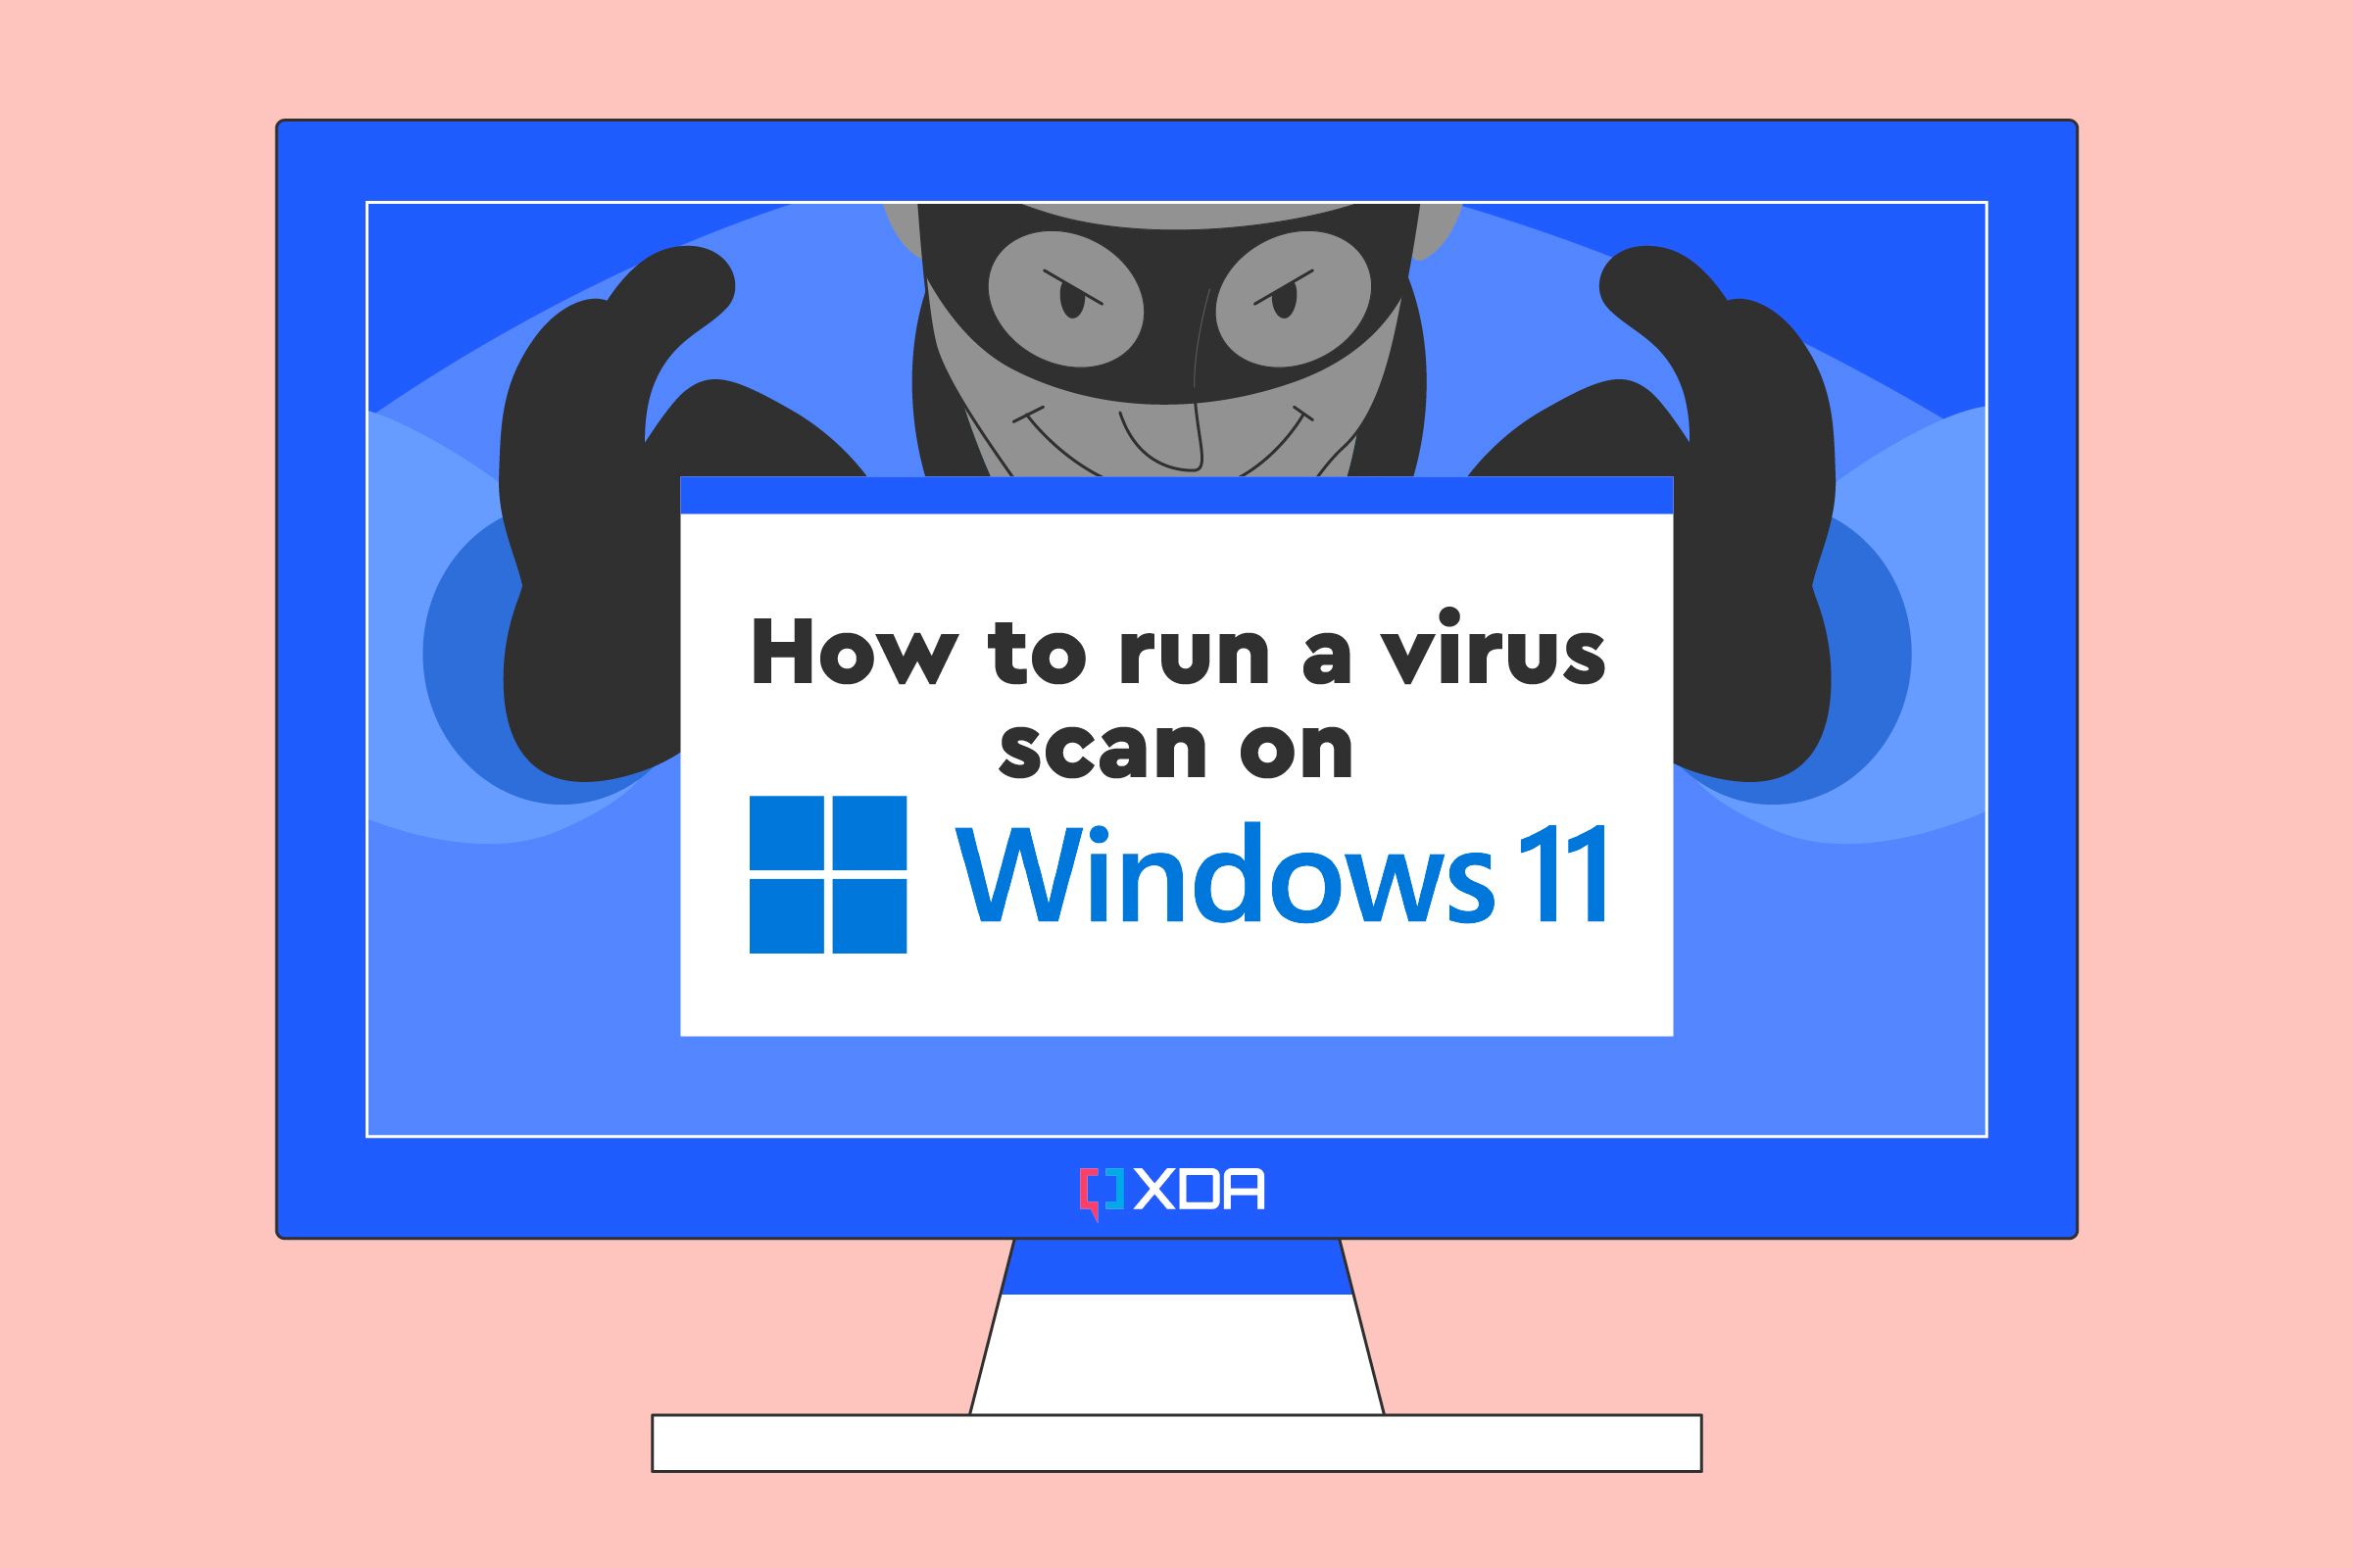 How to run a virus scan on Windows 11 